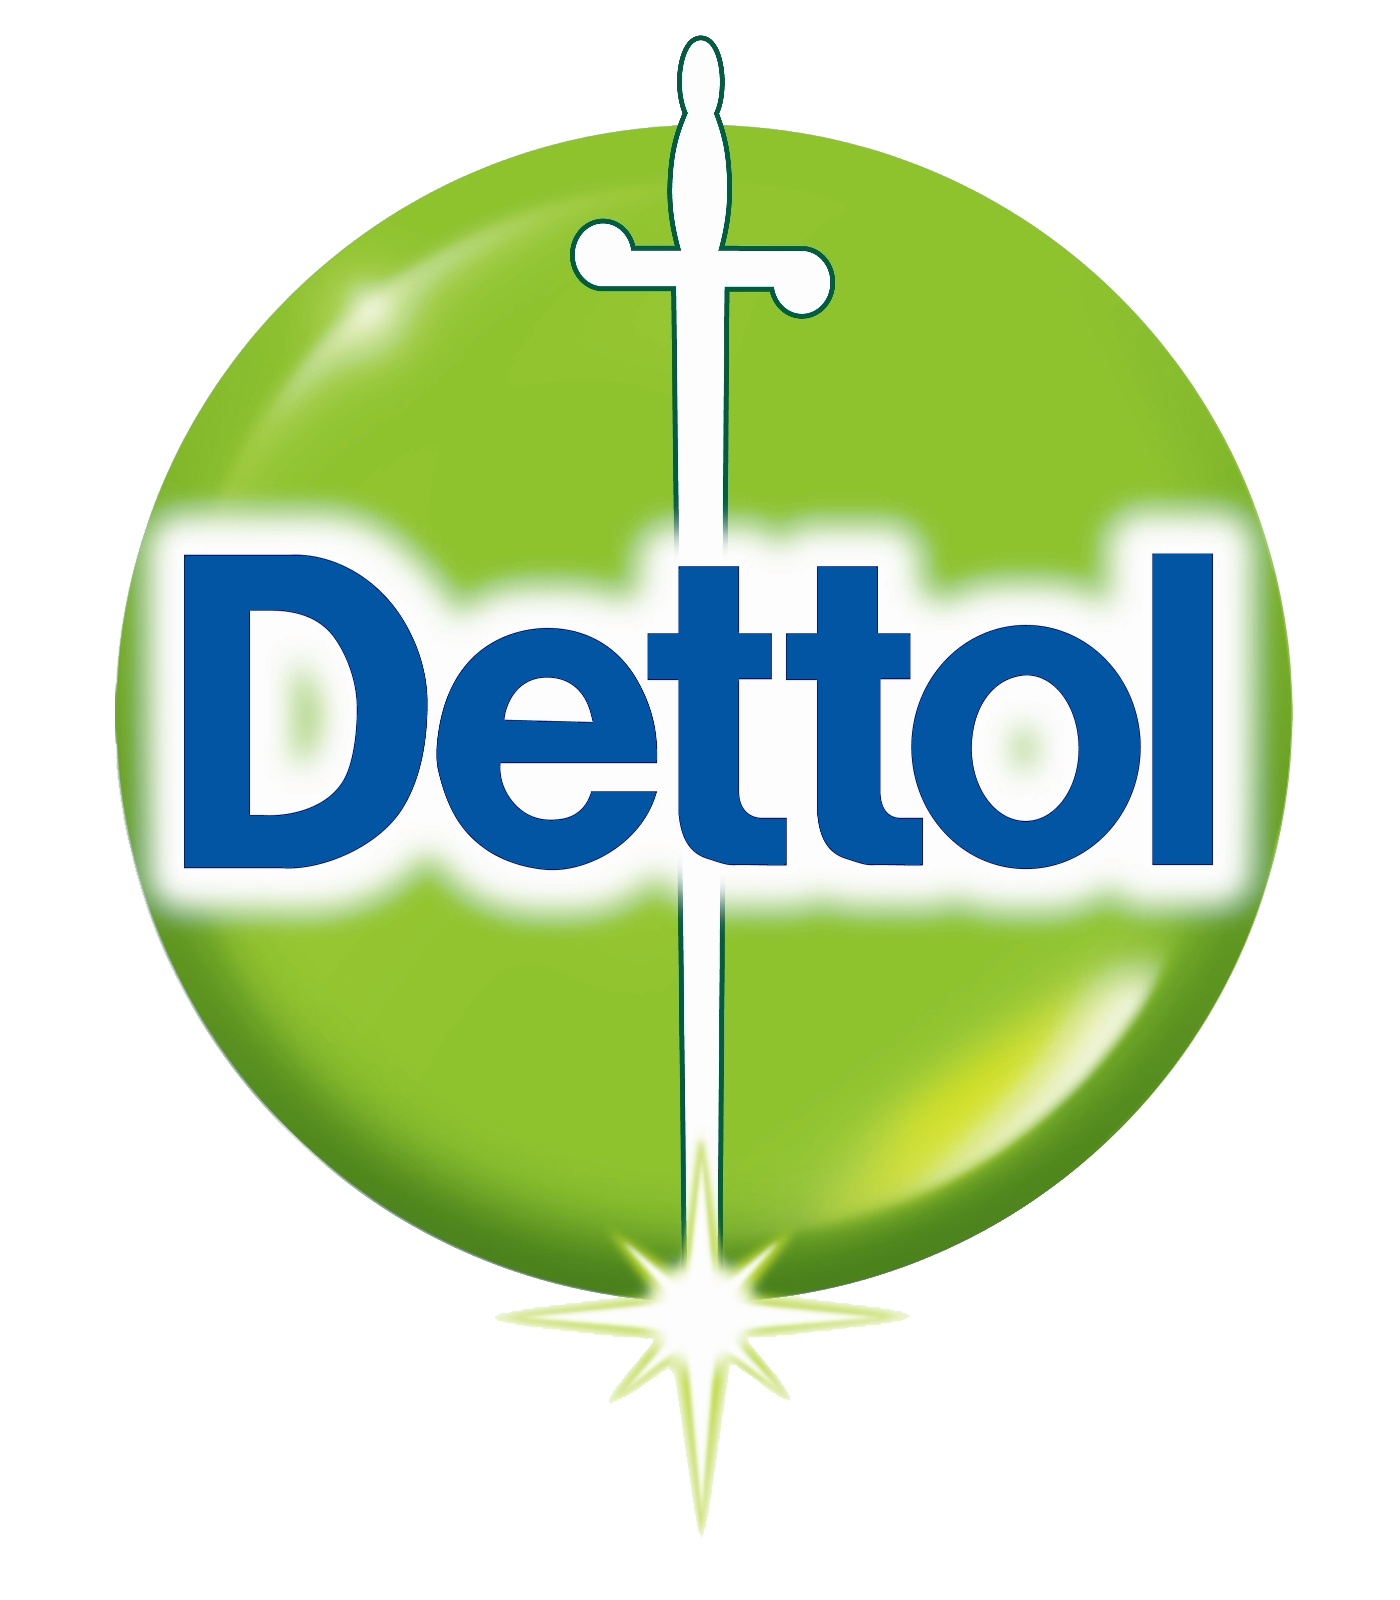 DETTOL logo